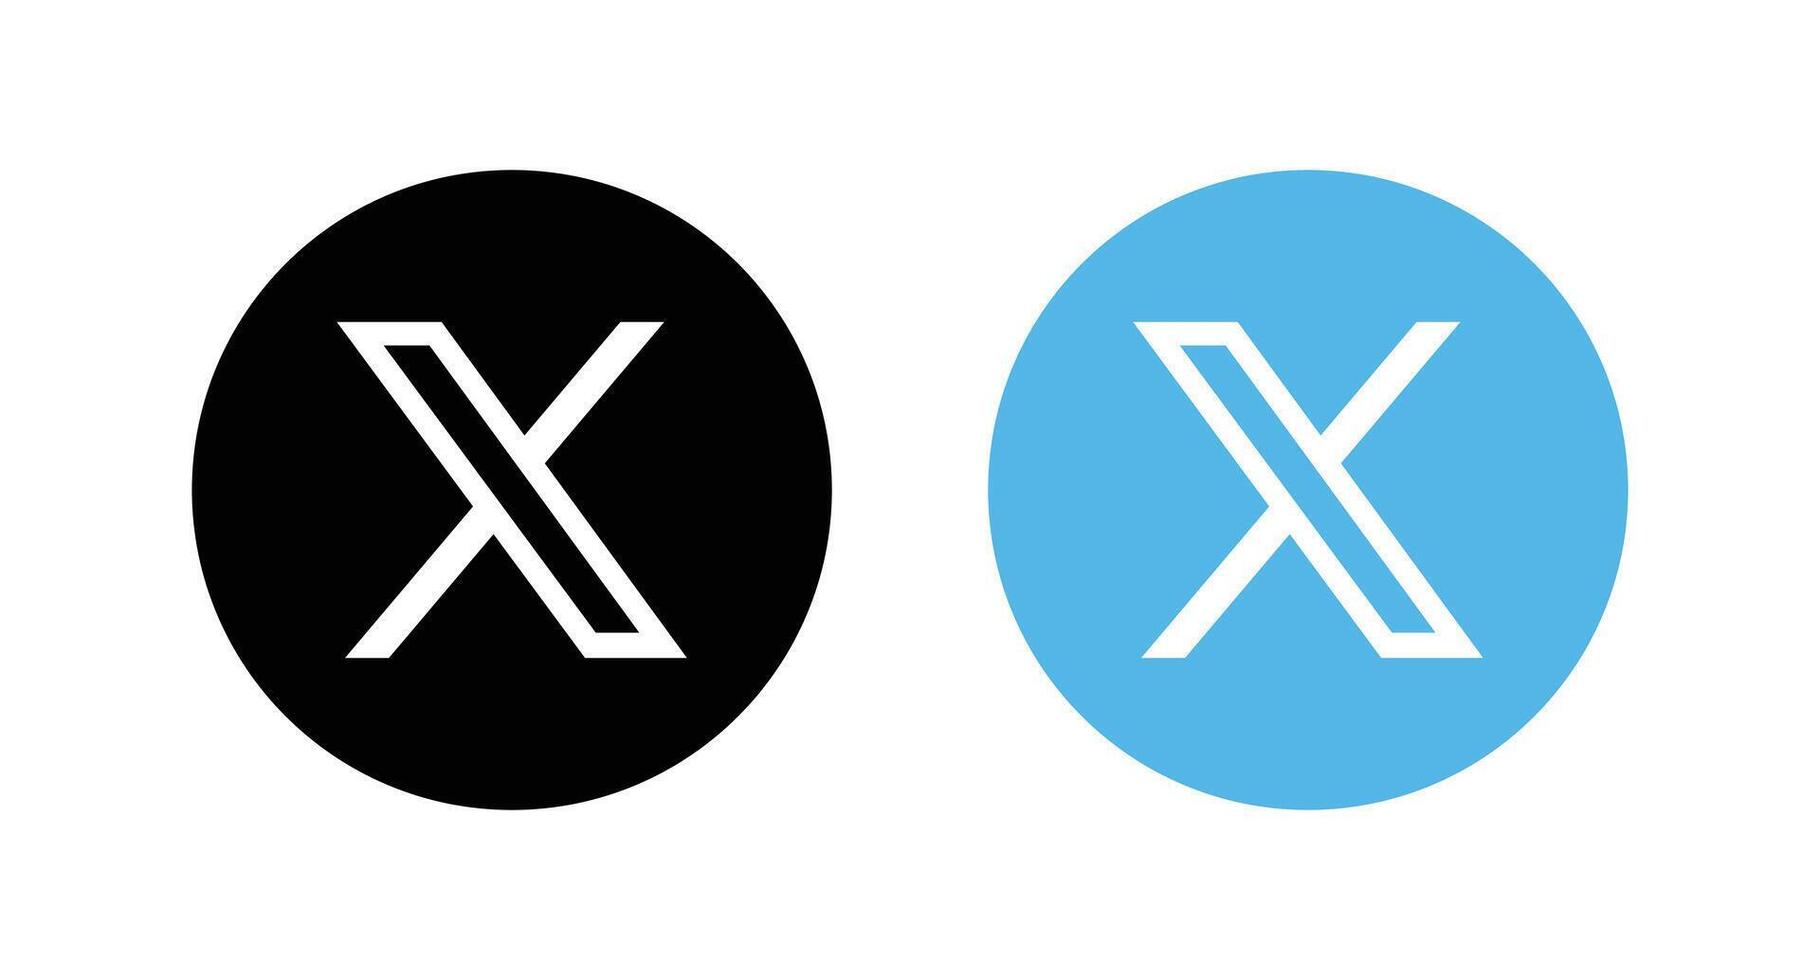 New Twitter x logo. Twitter icon. x Social media icon. vector